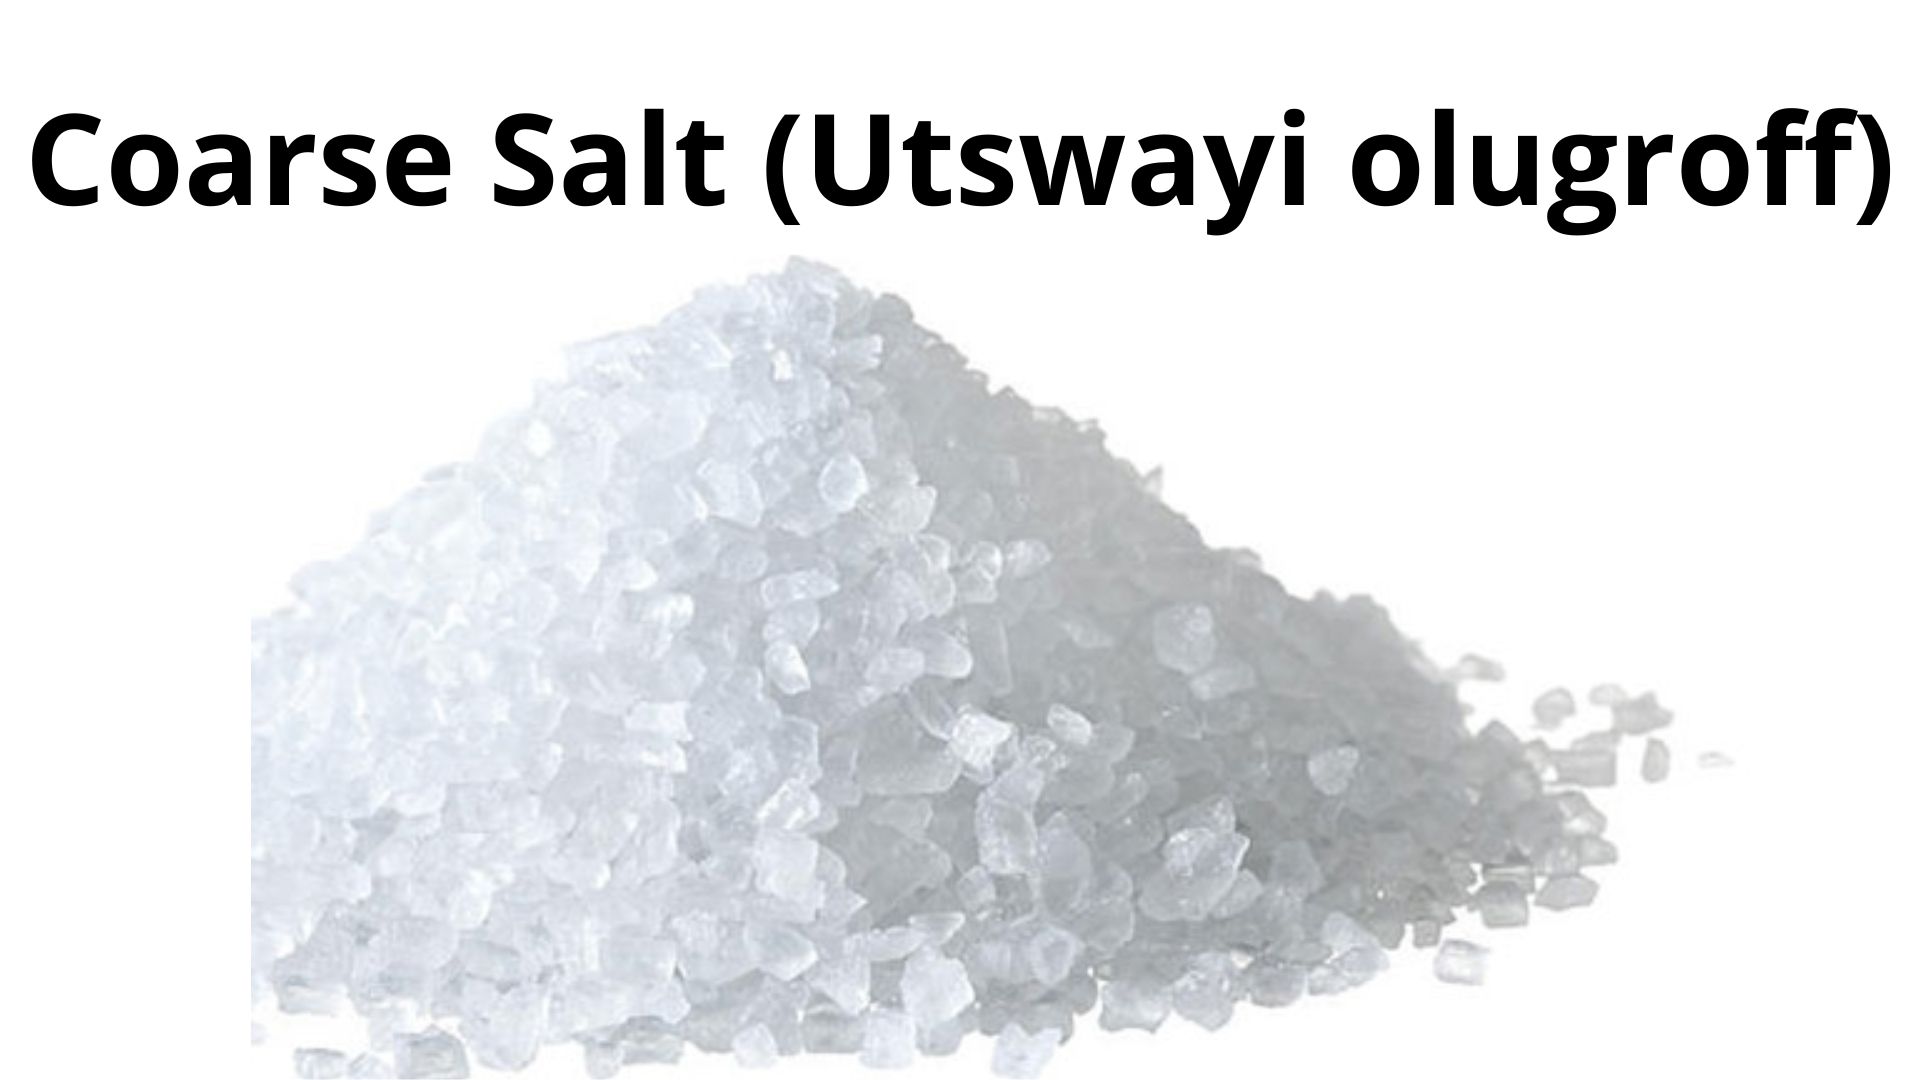 Coarse salt